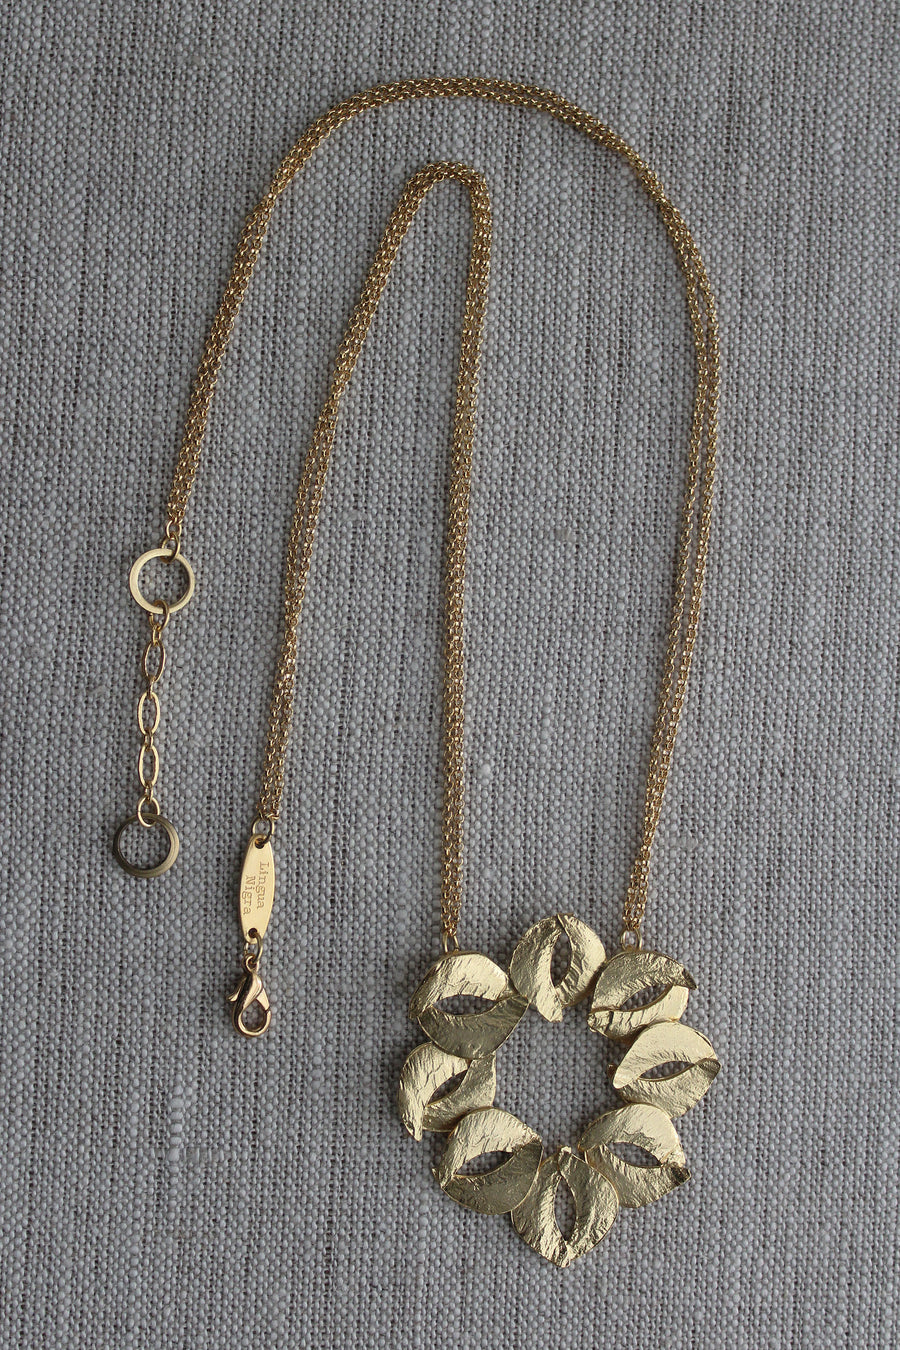 Organic Sculptured Gold Necklace